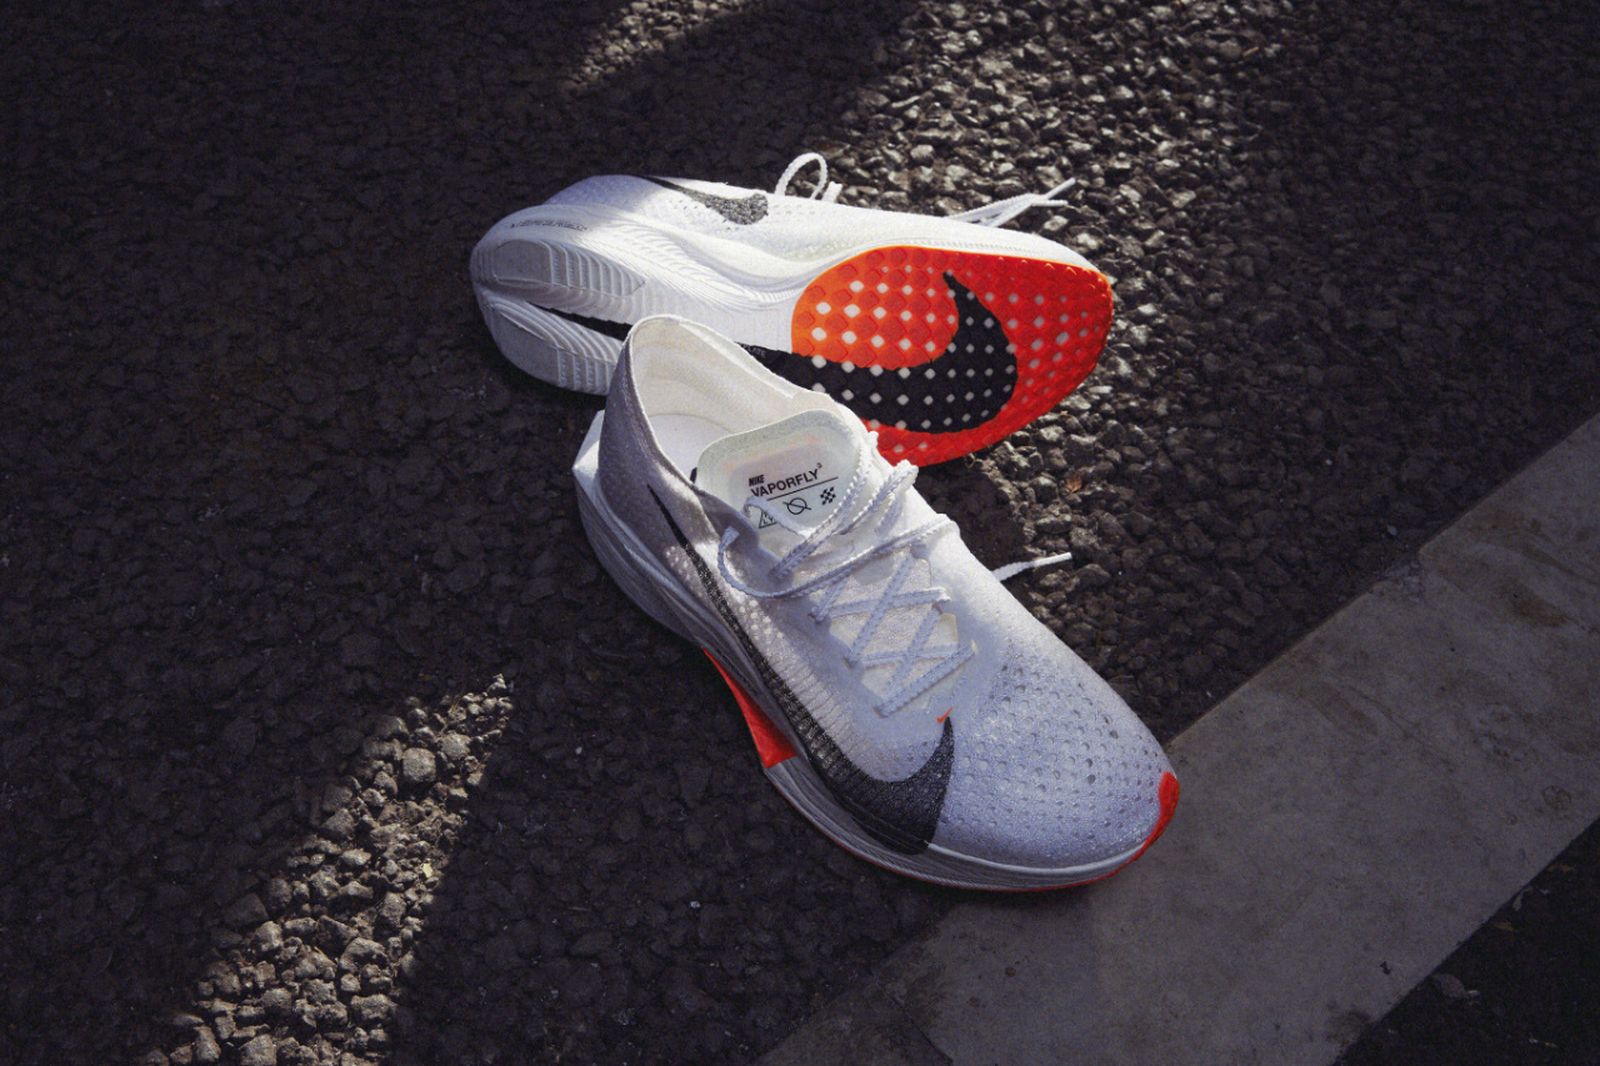 Desgracia longitud adherirse Nike's Vaporfly 3 Super Shoe Just Got, Well, Super-er